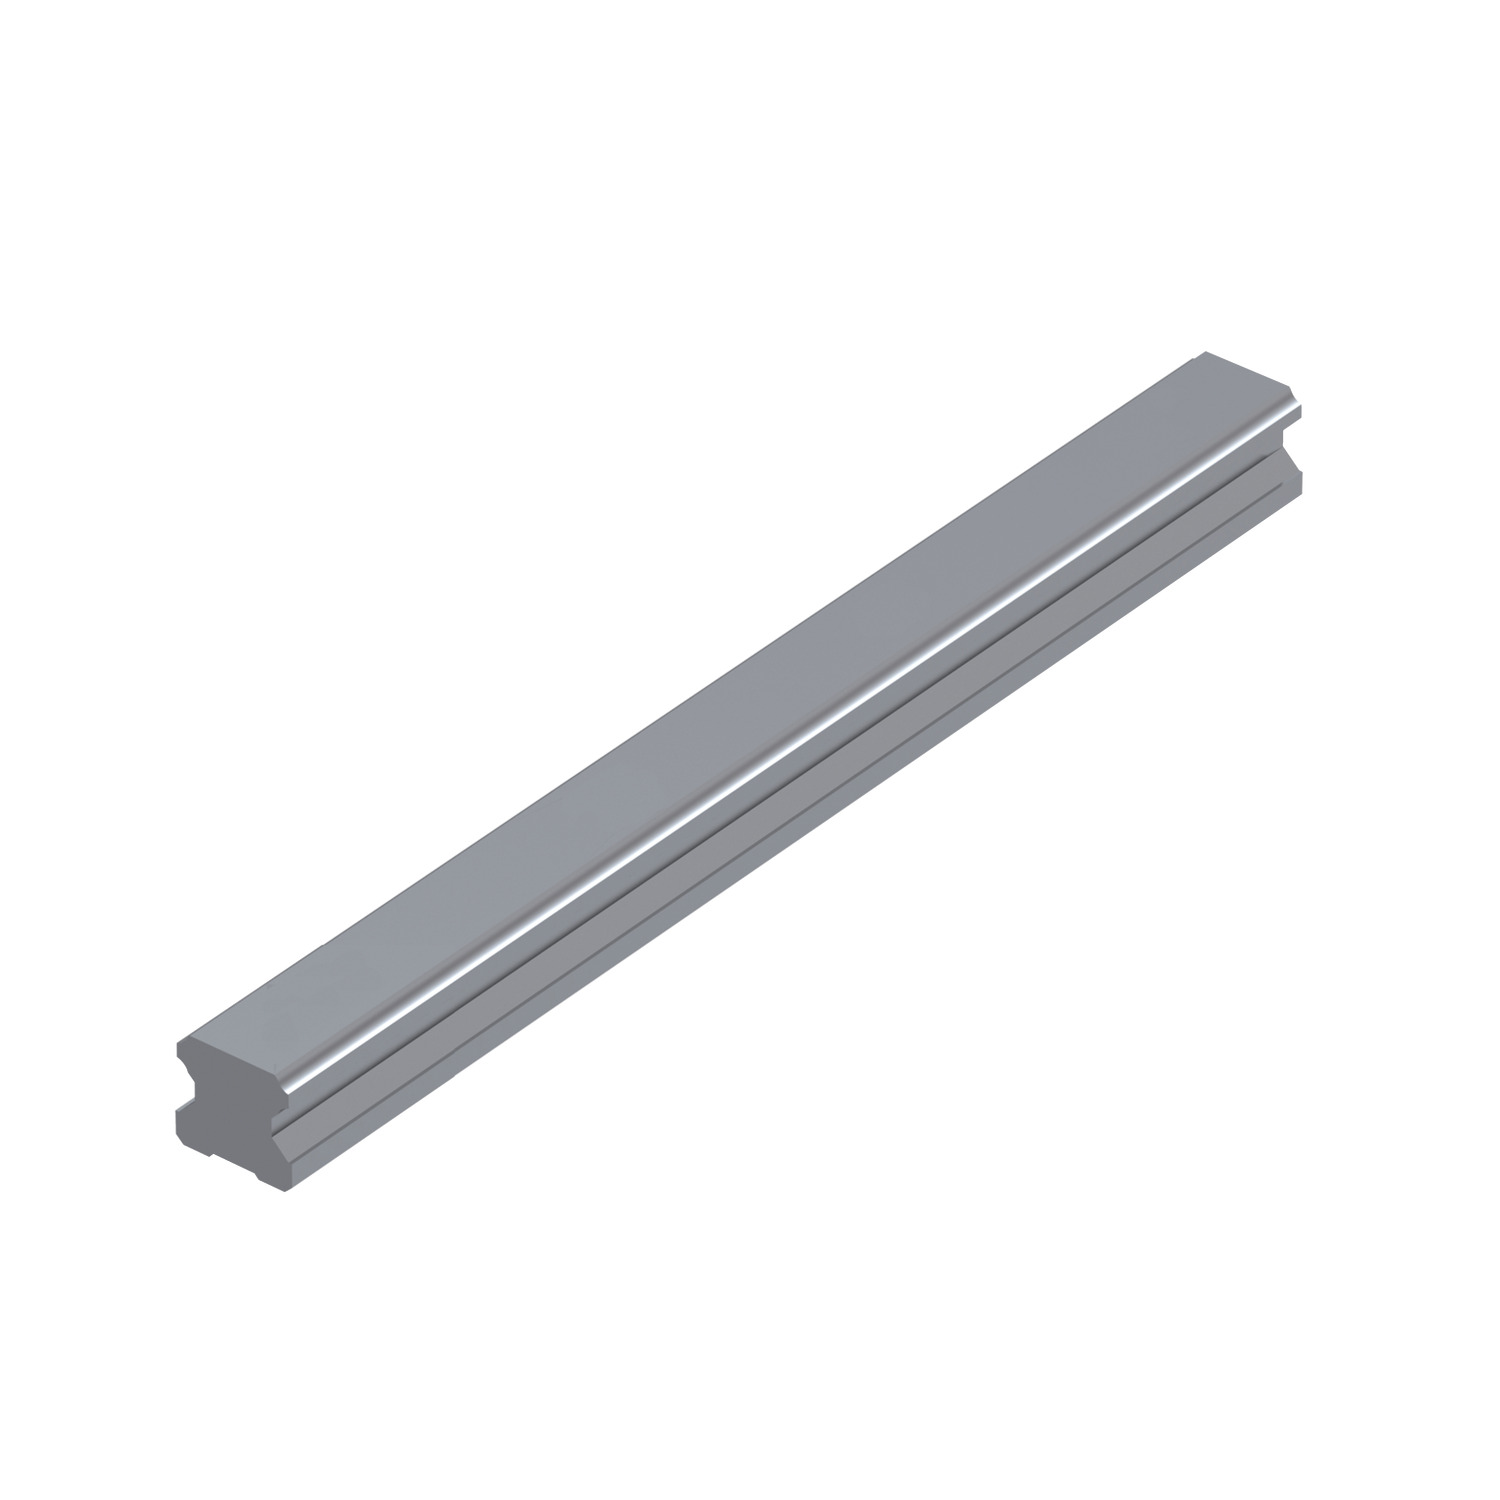 Product L1016.RF, 45mm Linear Guide Rail rear fixing / 